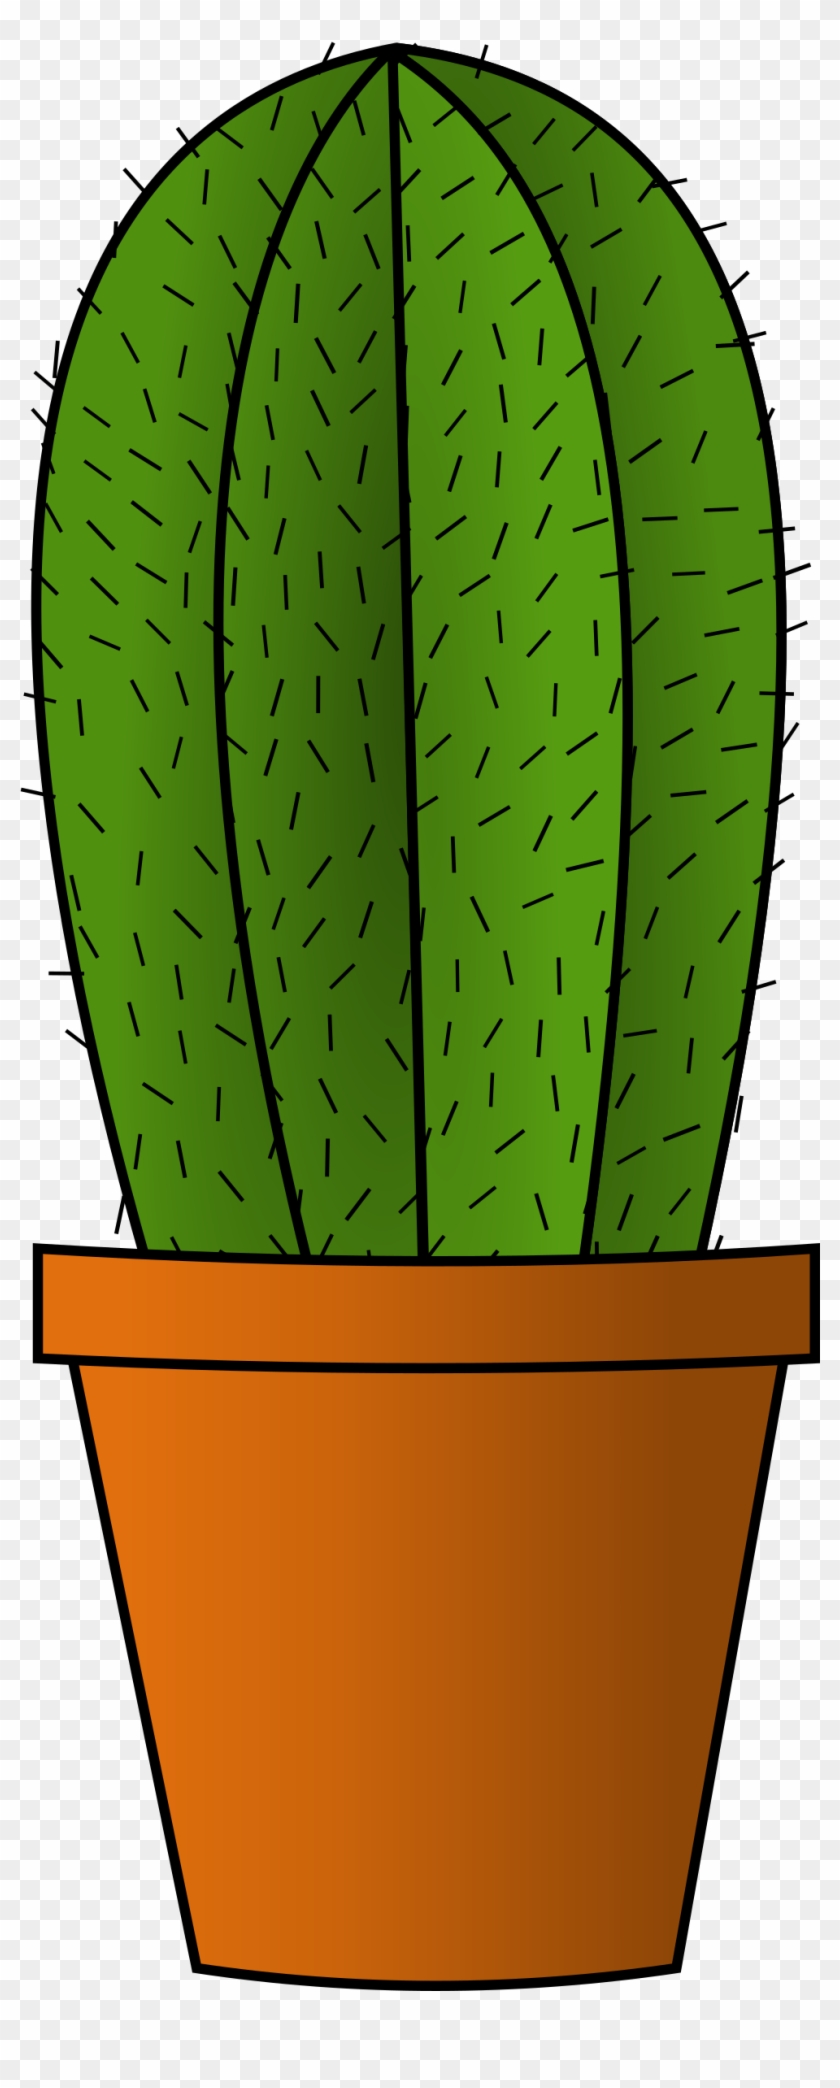 2012 February 19 Peacesymbol - Cactus In Pot Clipart #570945